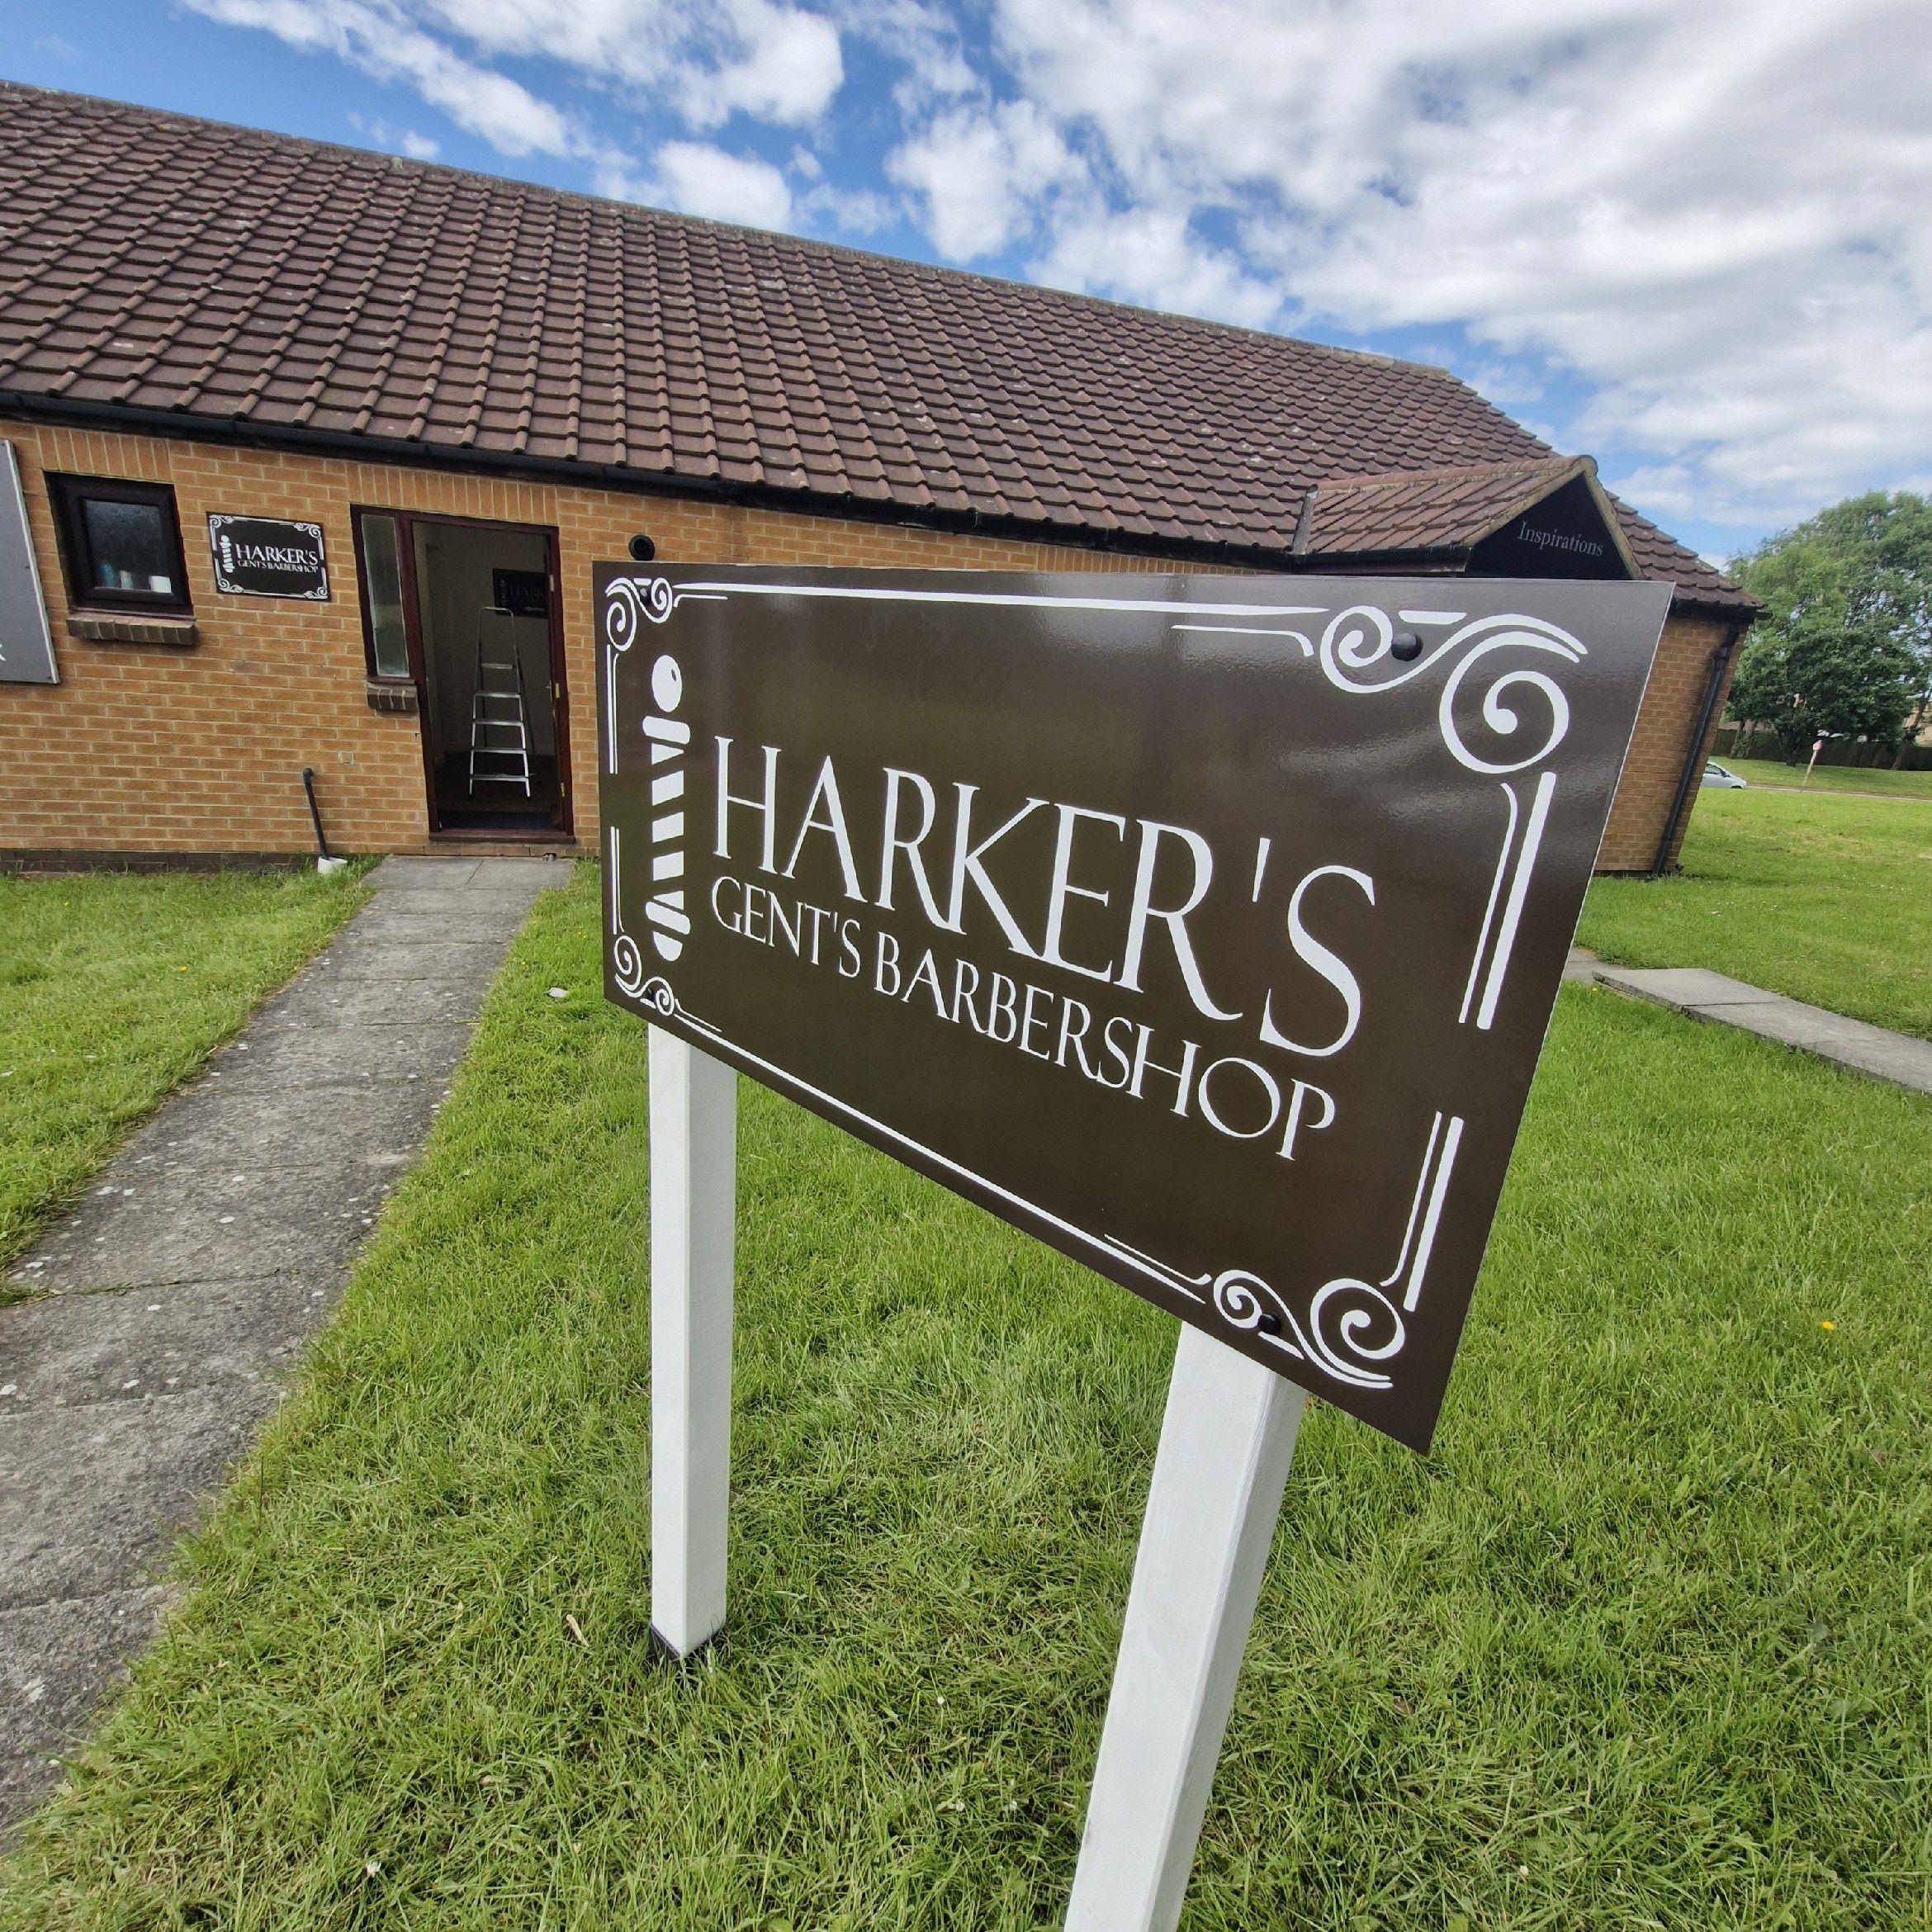 Harker's Gent's Barbershop, Barwick lodged , Ingleby Way, Ingleby barwick, TS17 0RH, Stockton-on-Tees